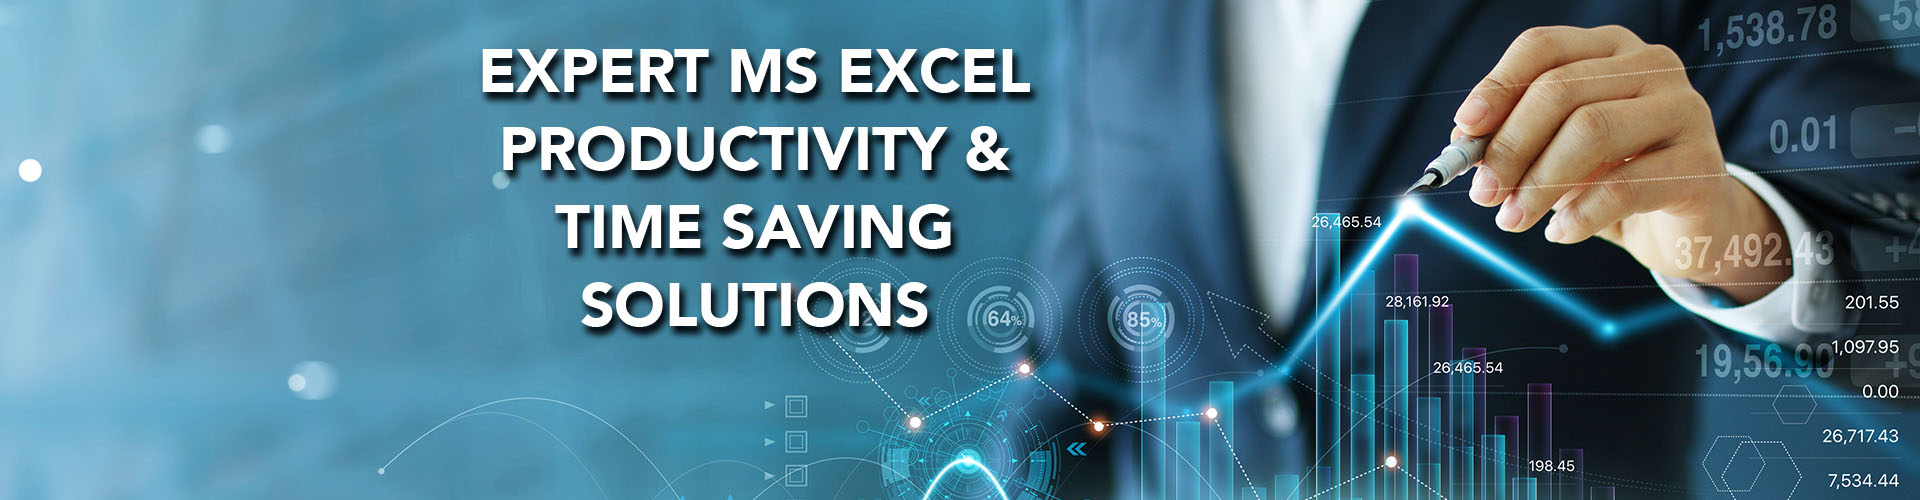 Top banner 1 : Santa Clarita Excel Expert | Expert inMicrosoft Excel Effeciency tools | MS Excel Effeciency / Cost Saving / MS Excel Productivity Solutions